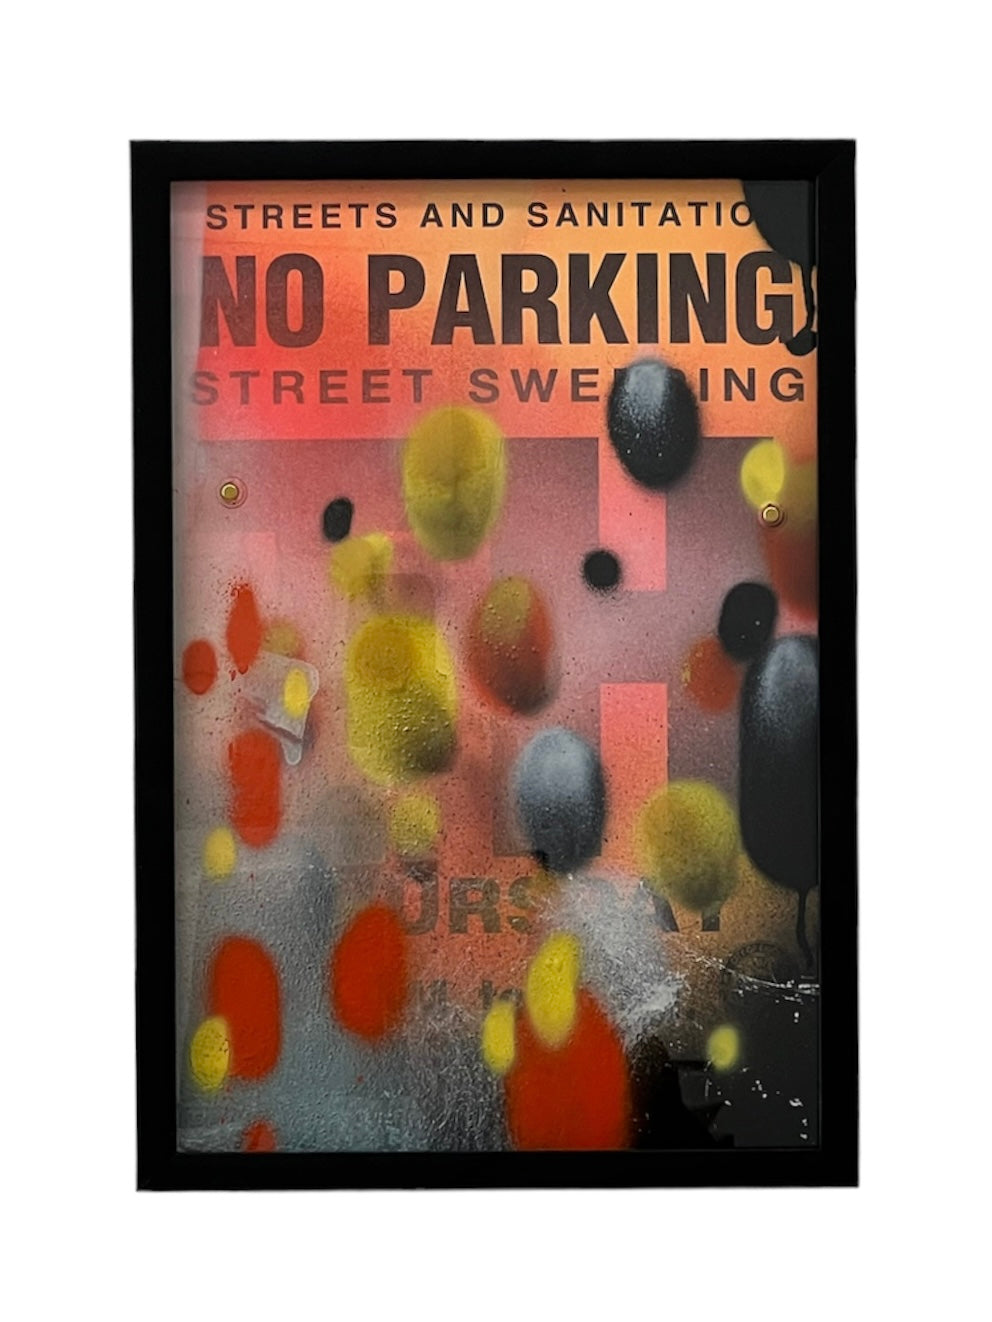 "No Parking" #9